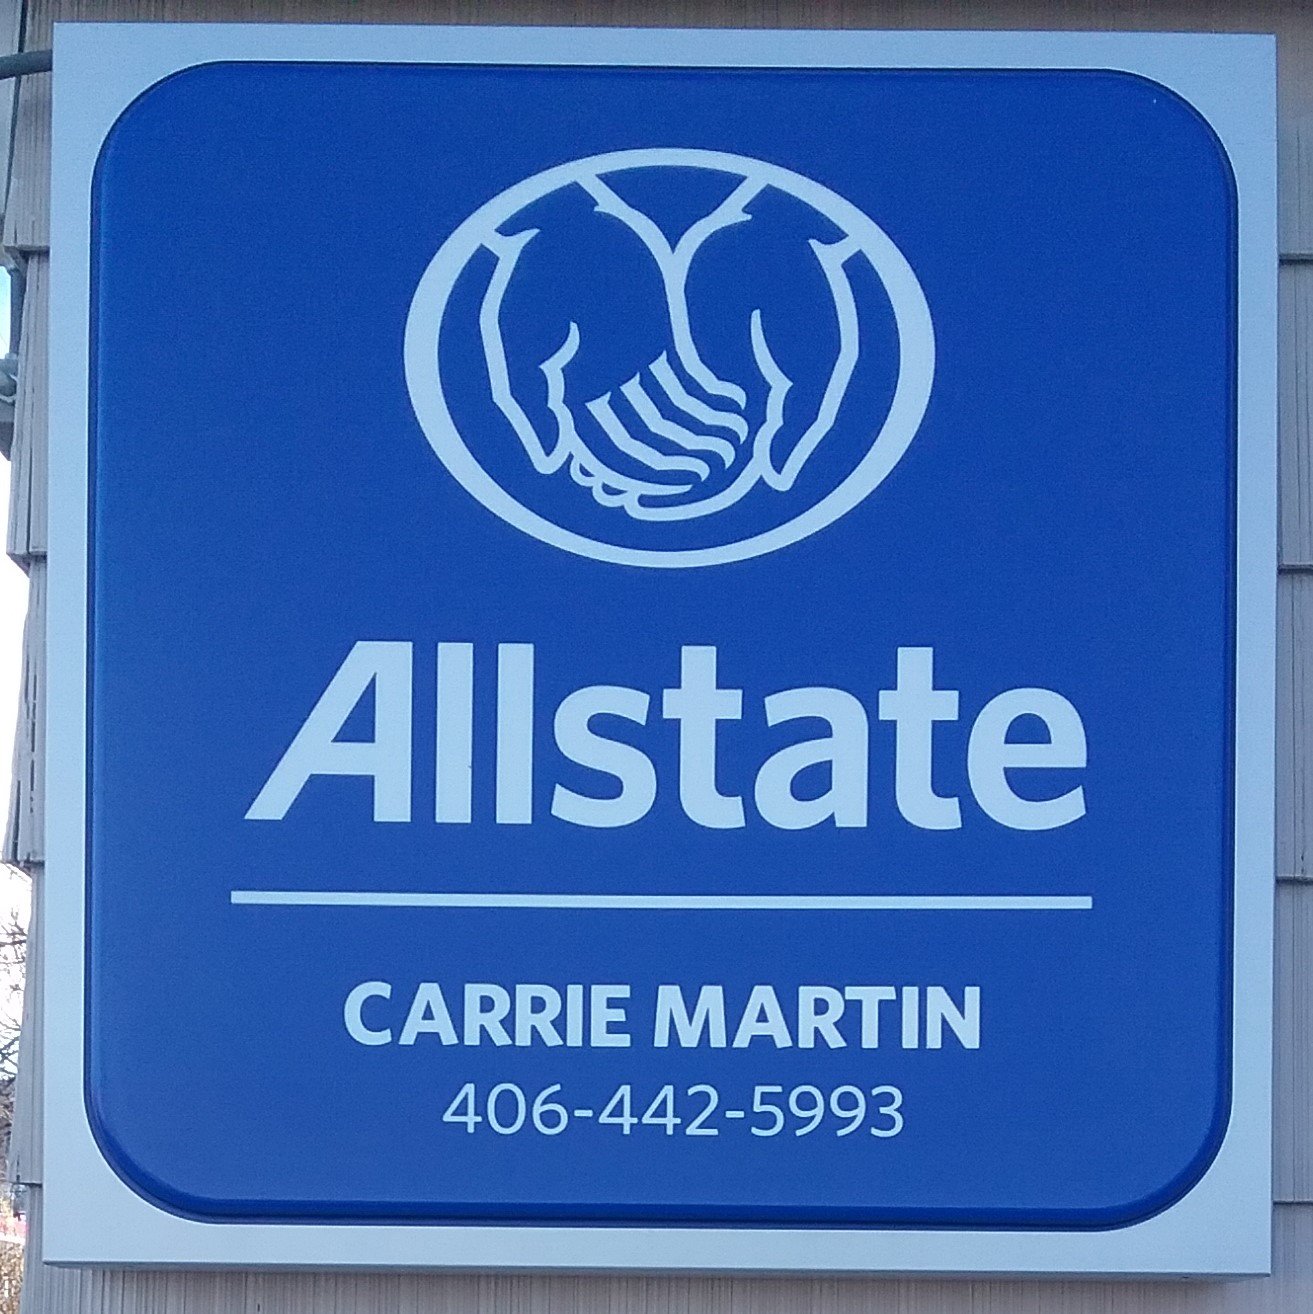 Allstate Car Insurance in Helena, MT Carrie Martin